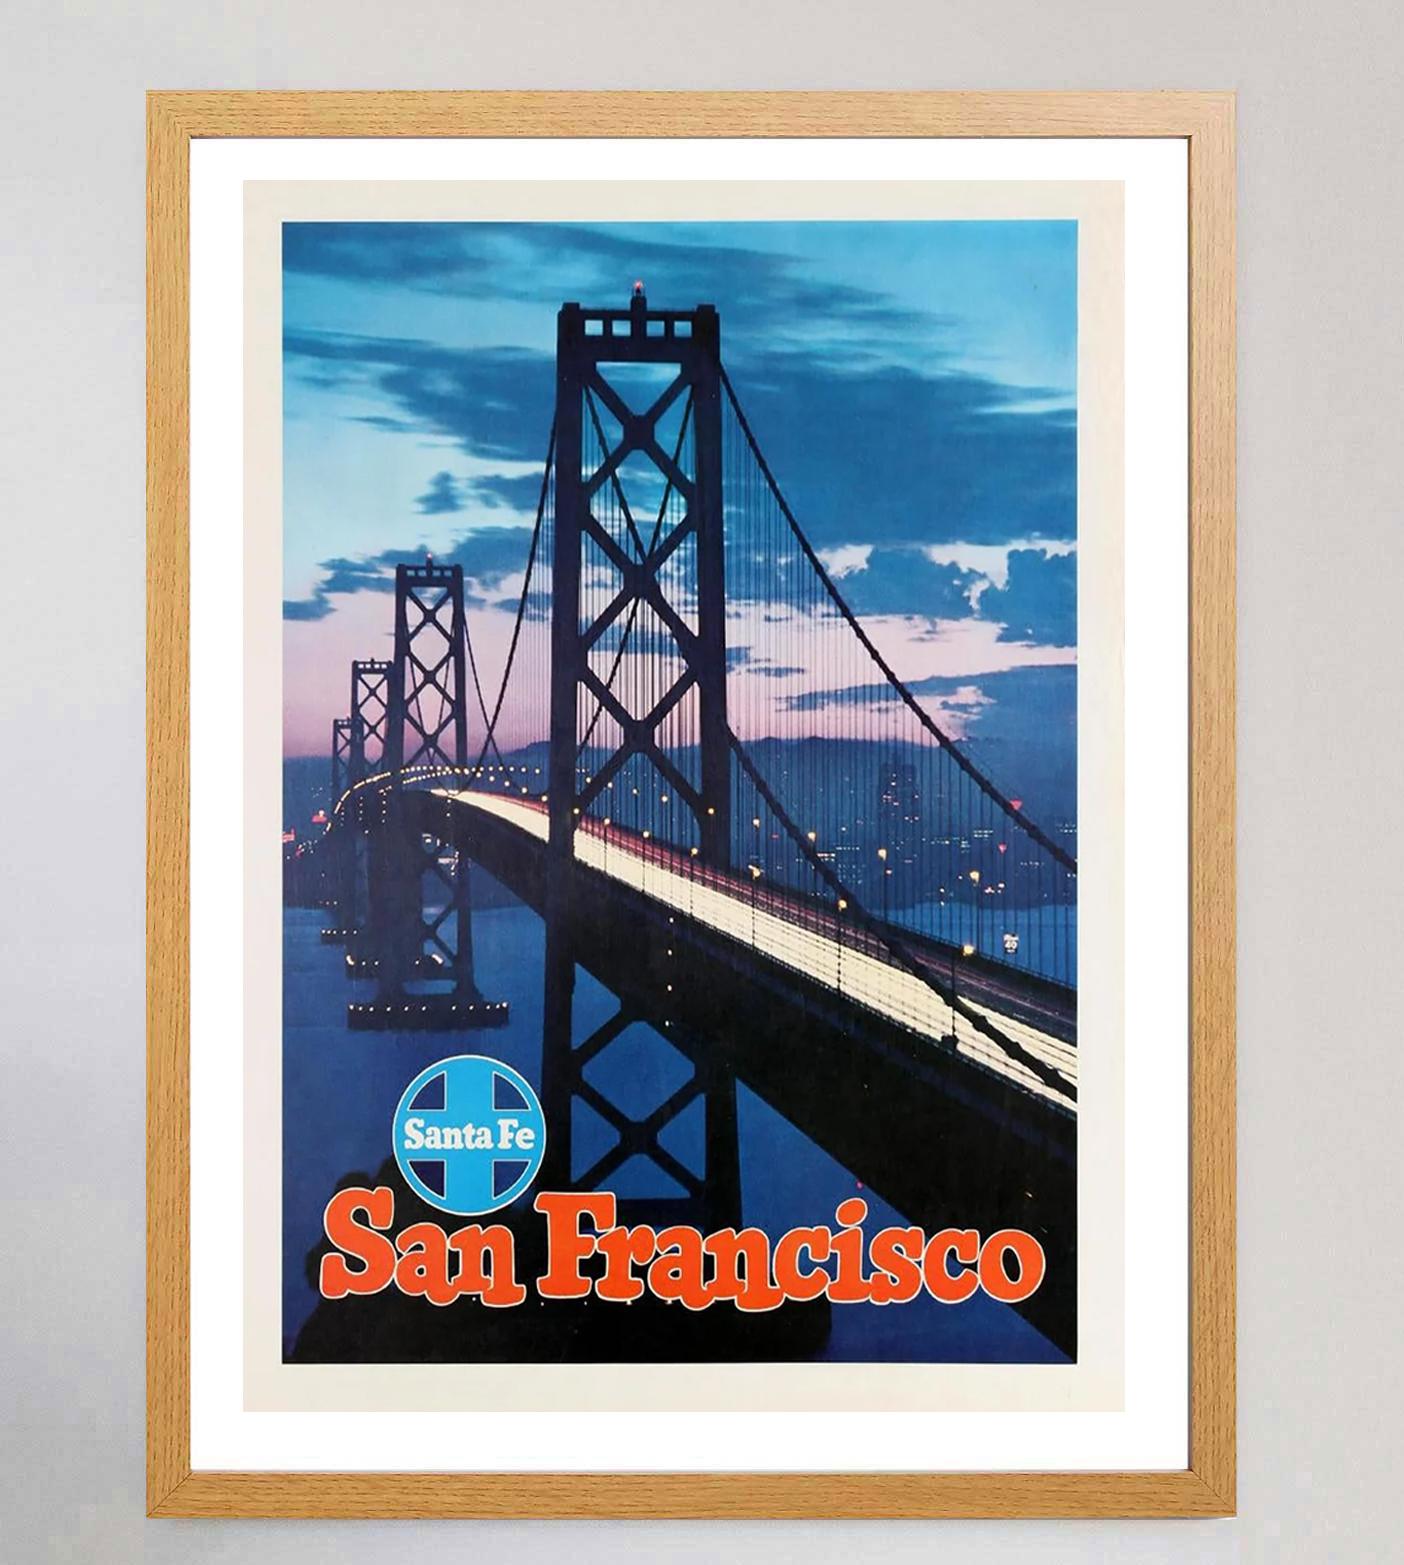 American 1950 Santa Fe Railway, San Francisco Original Vintage Poster For Sale